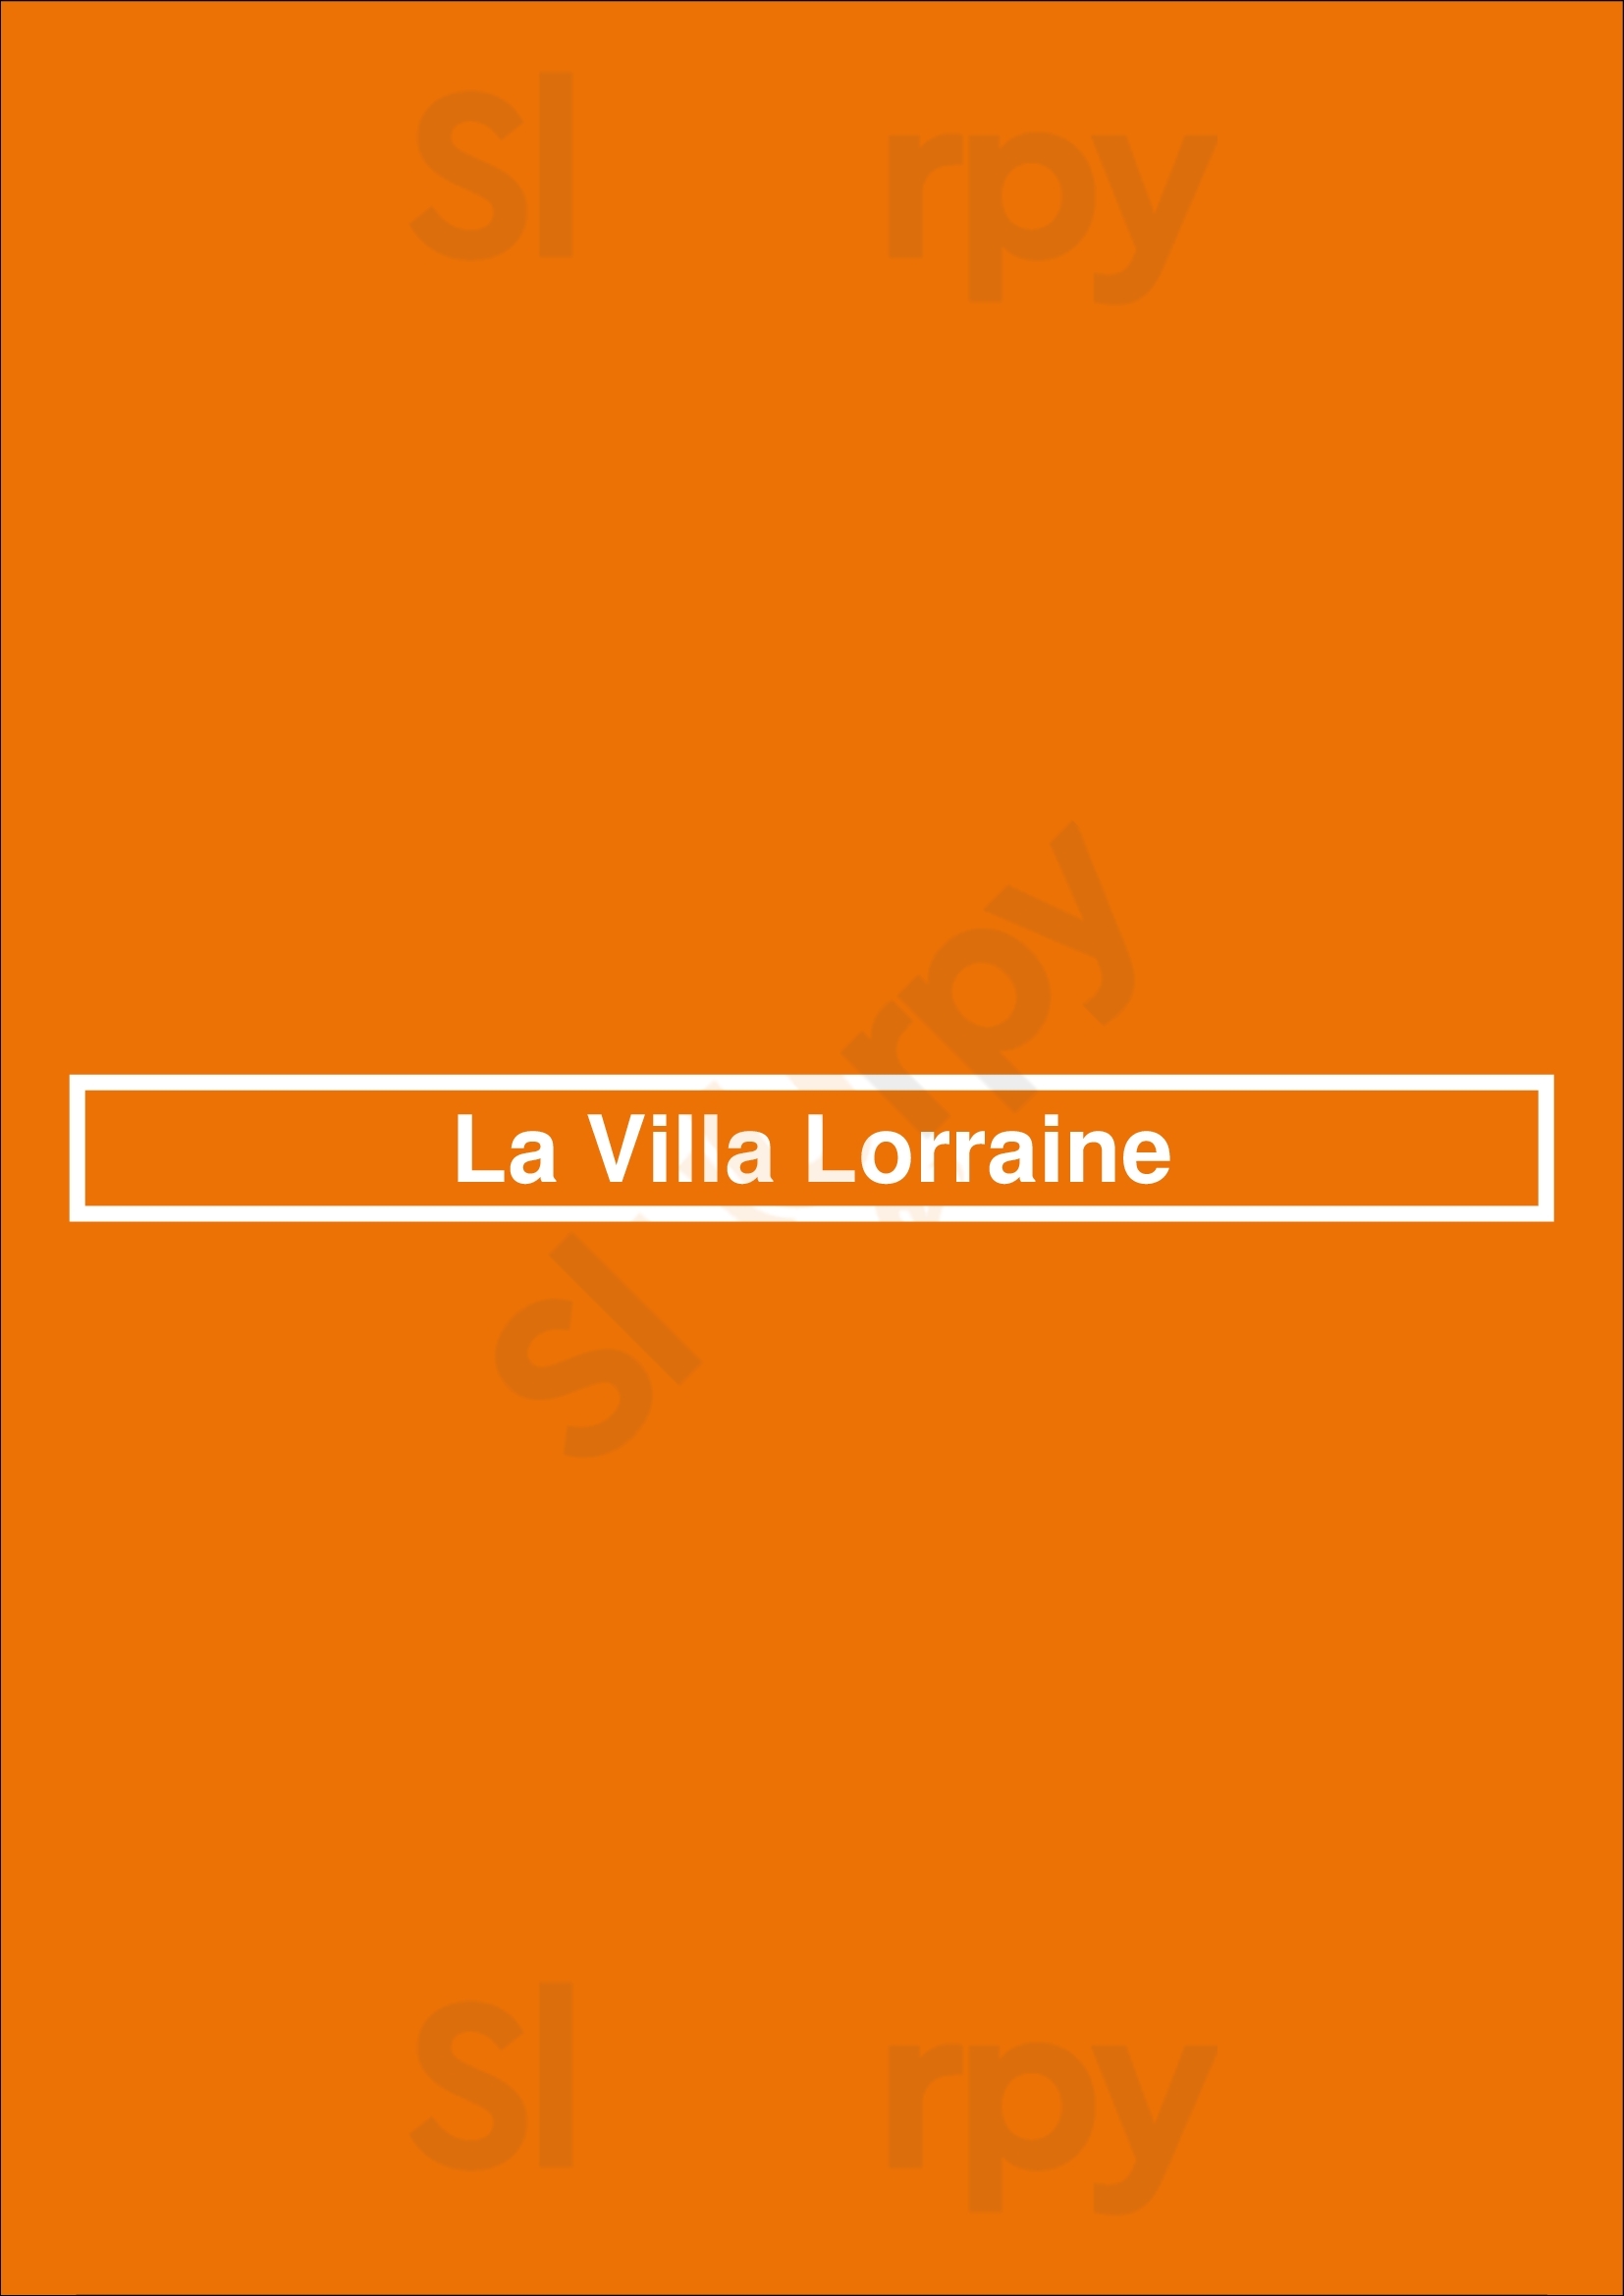 La Villa Lorraine Bruxelles Menu - 1